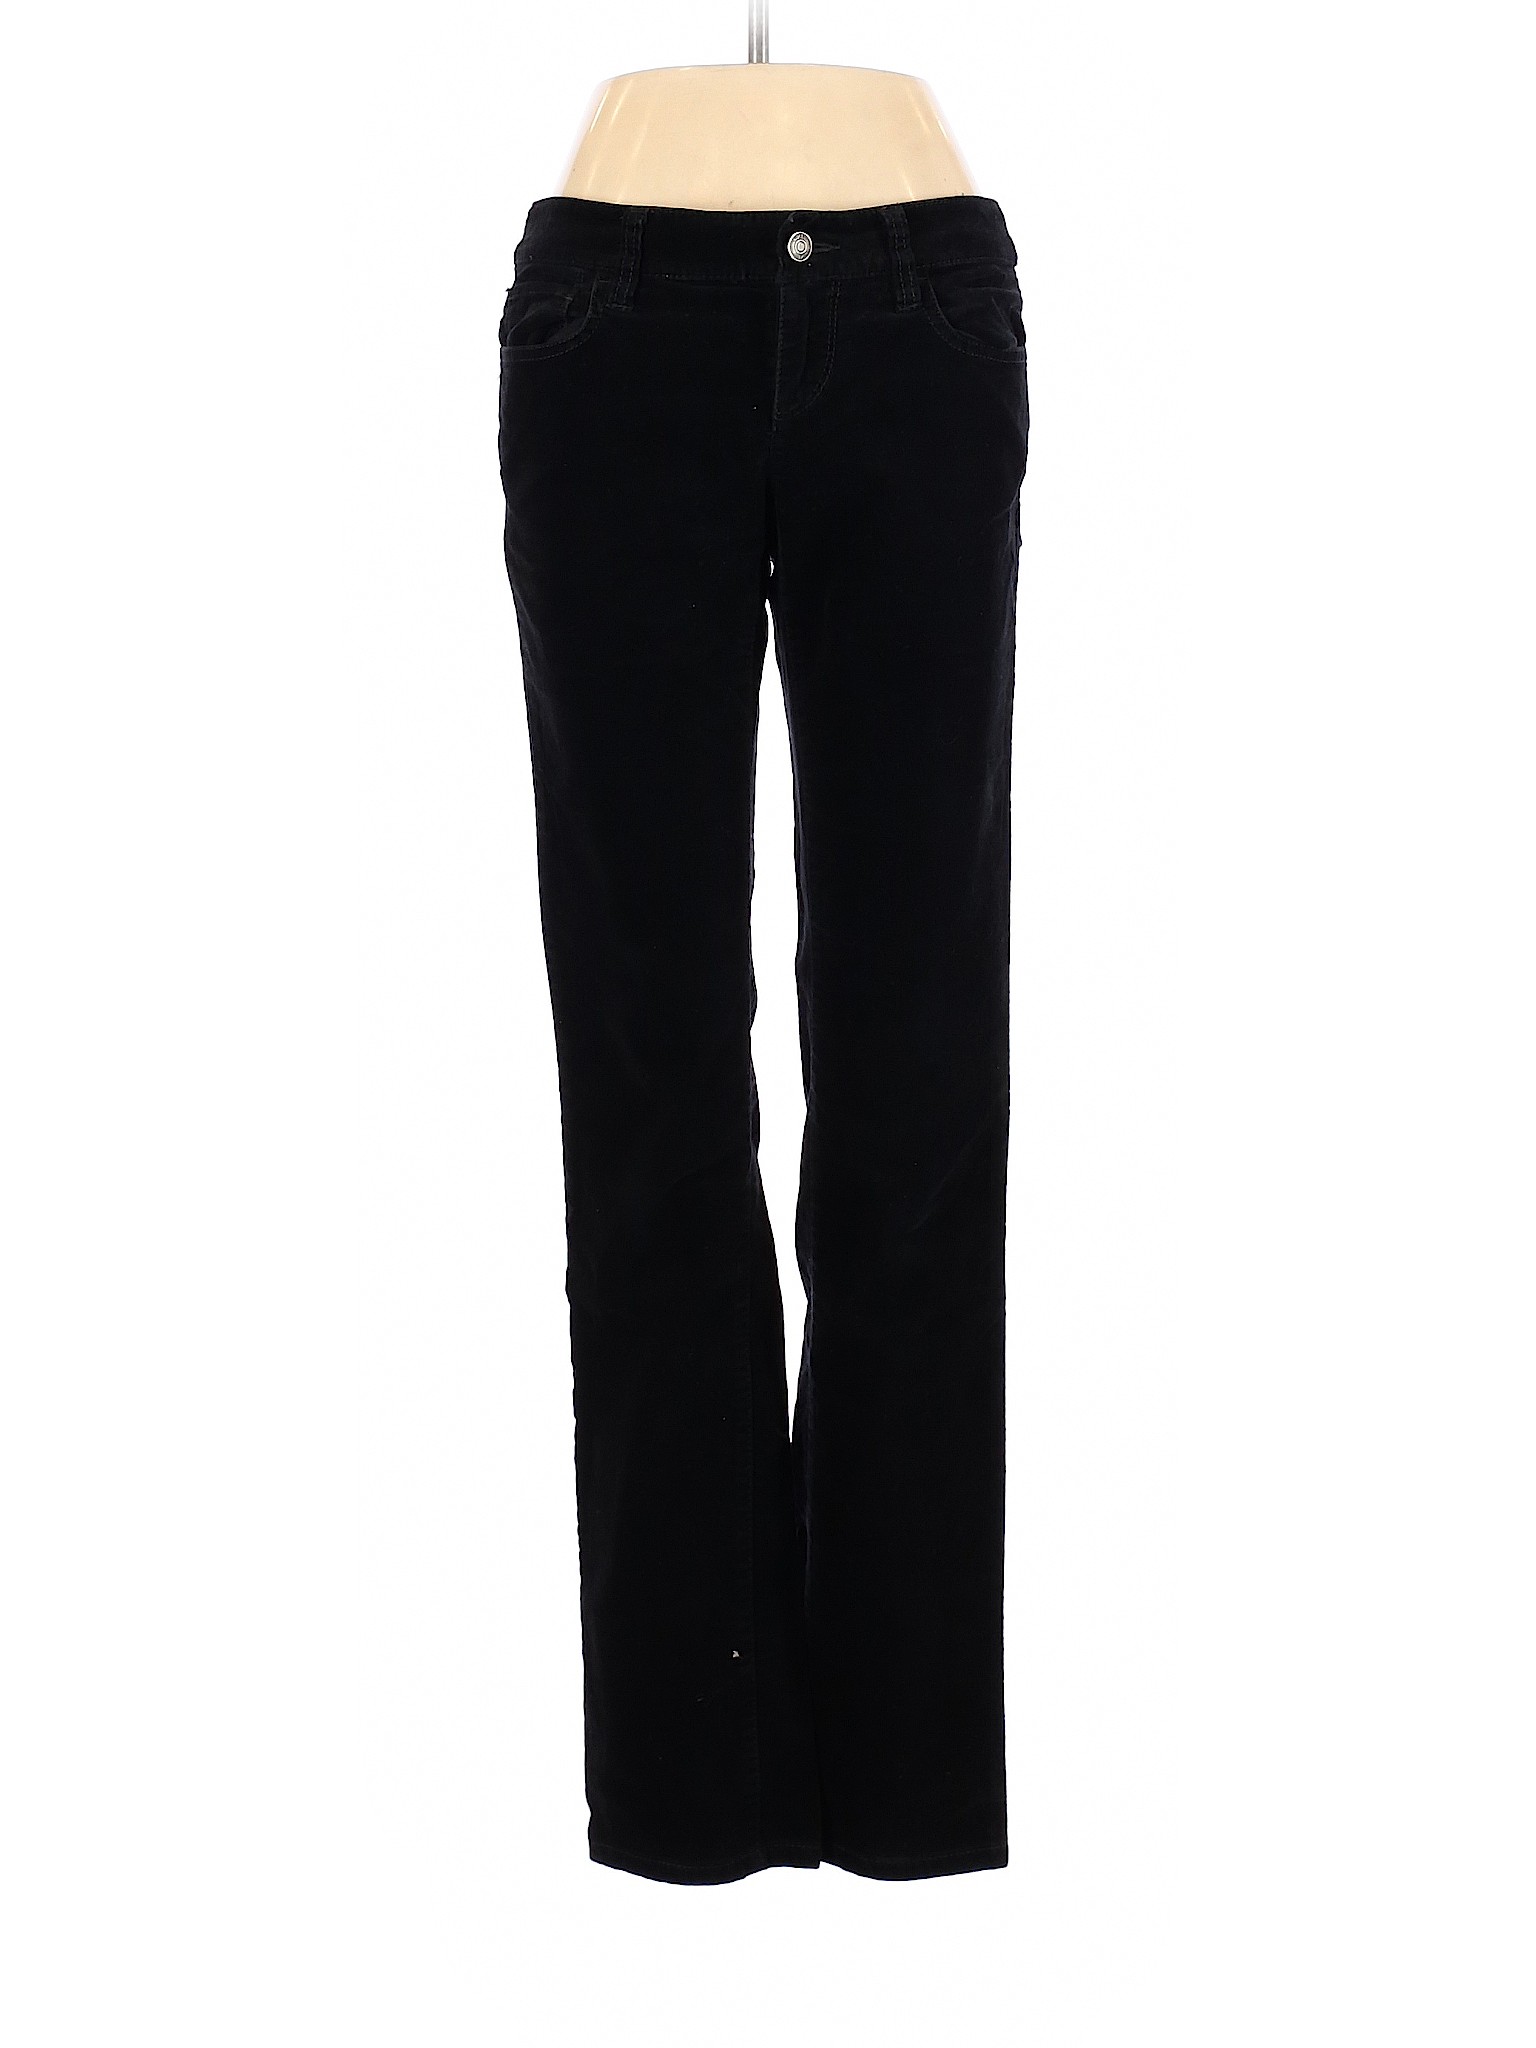 Ann Taylor LOFT Outlet Women Black Jeans 0 | eBay